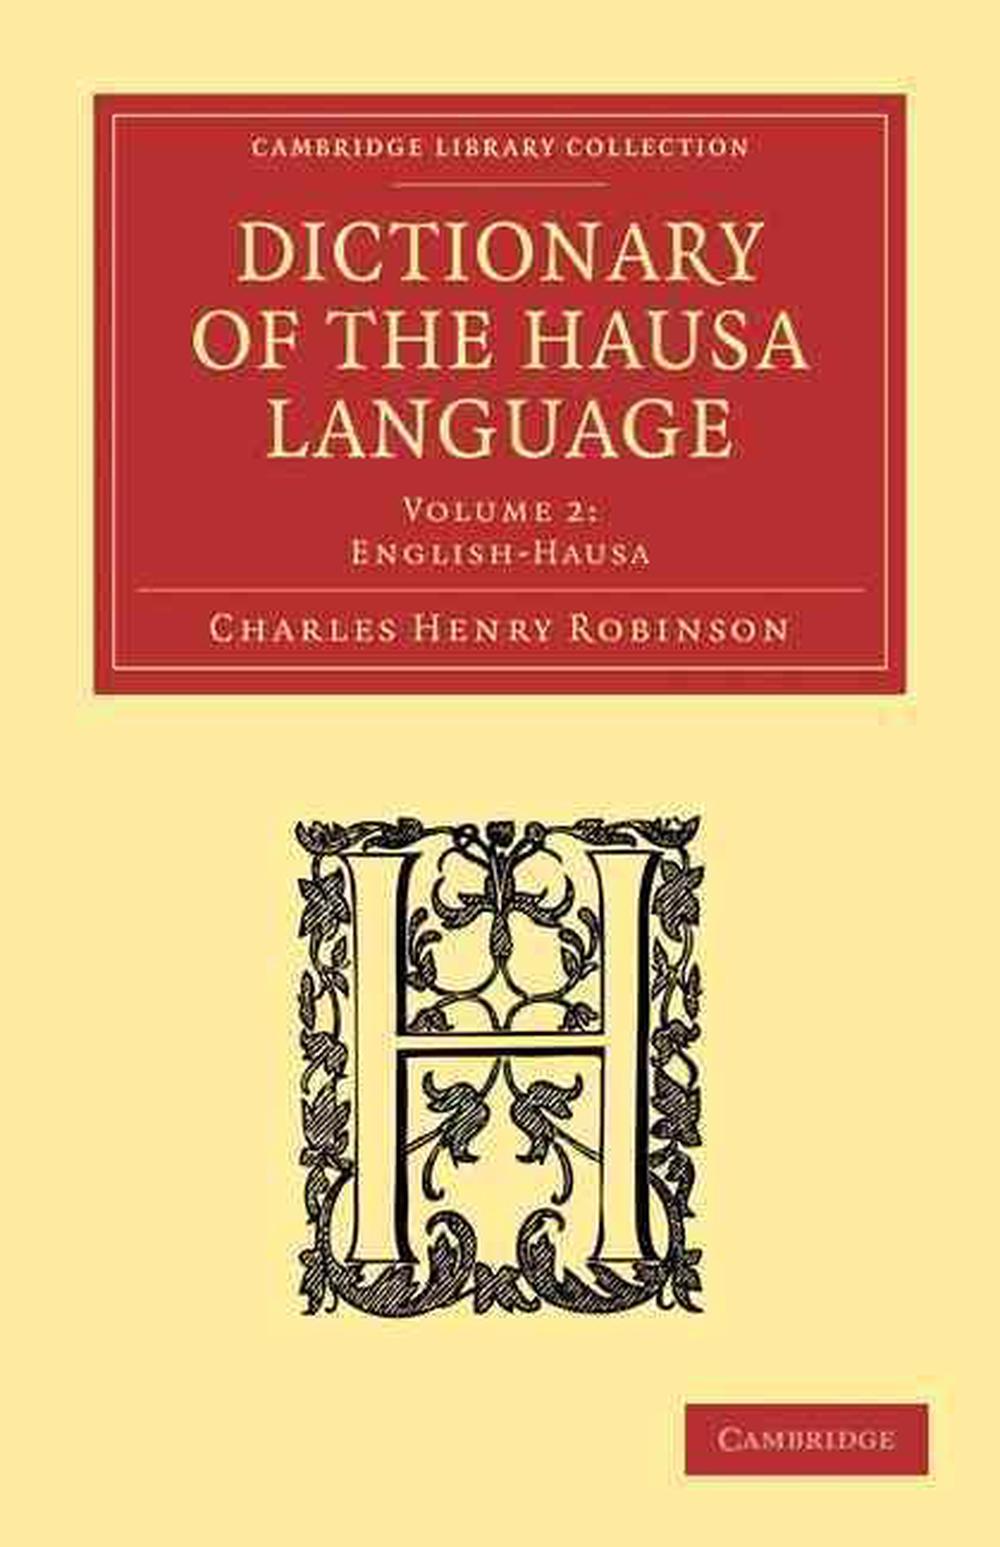 Hausa language. Хауса язык. Учебник языка хауса. The Random House Dictionary of the English language (1973).